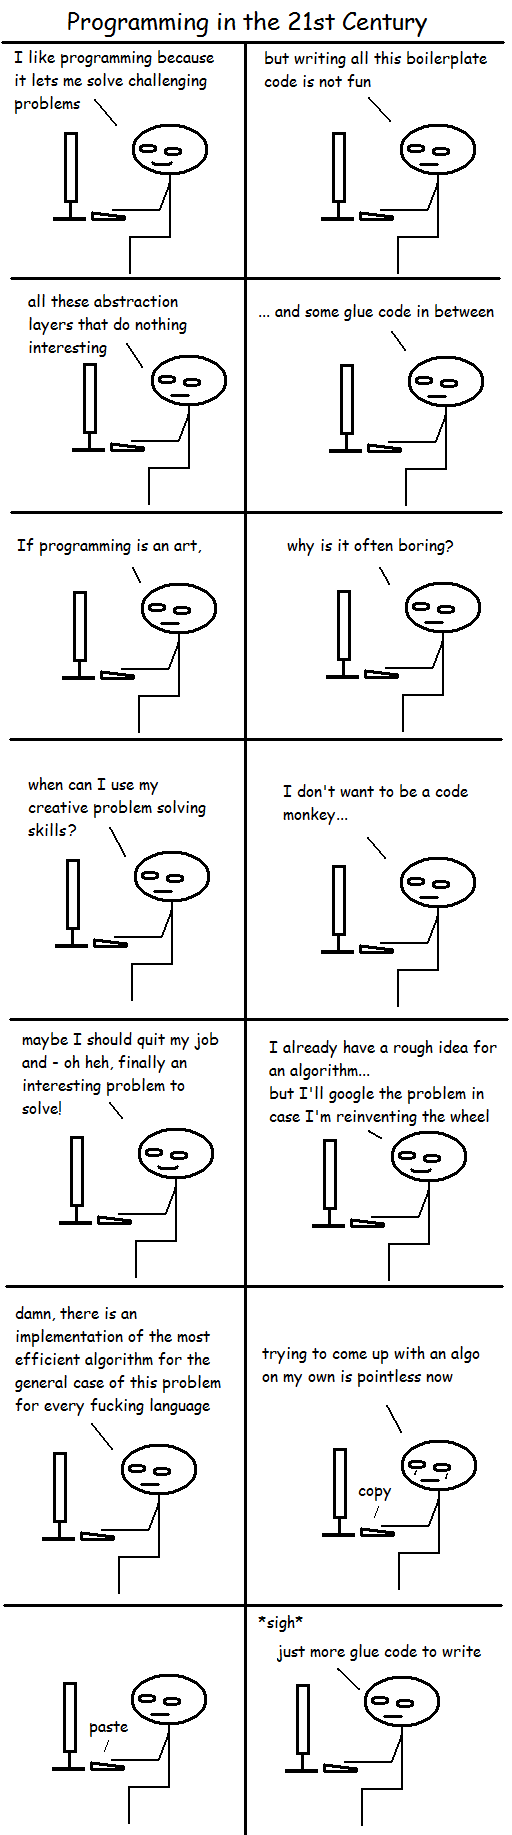 Glue code to write.